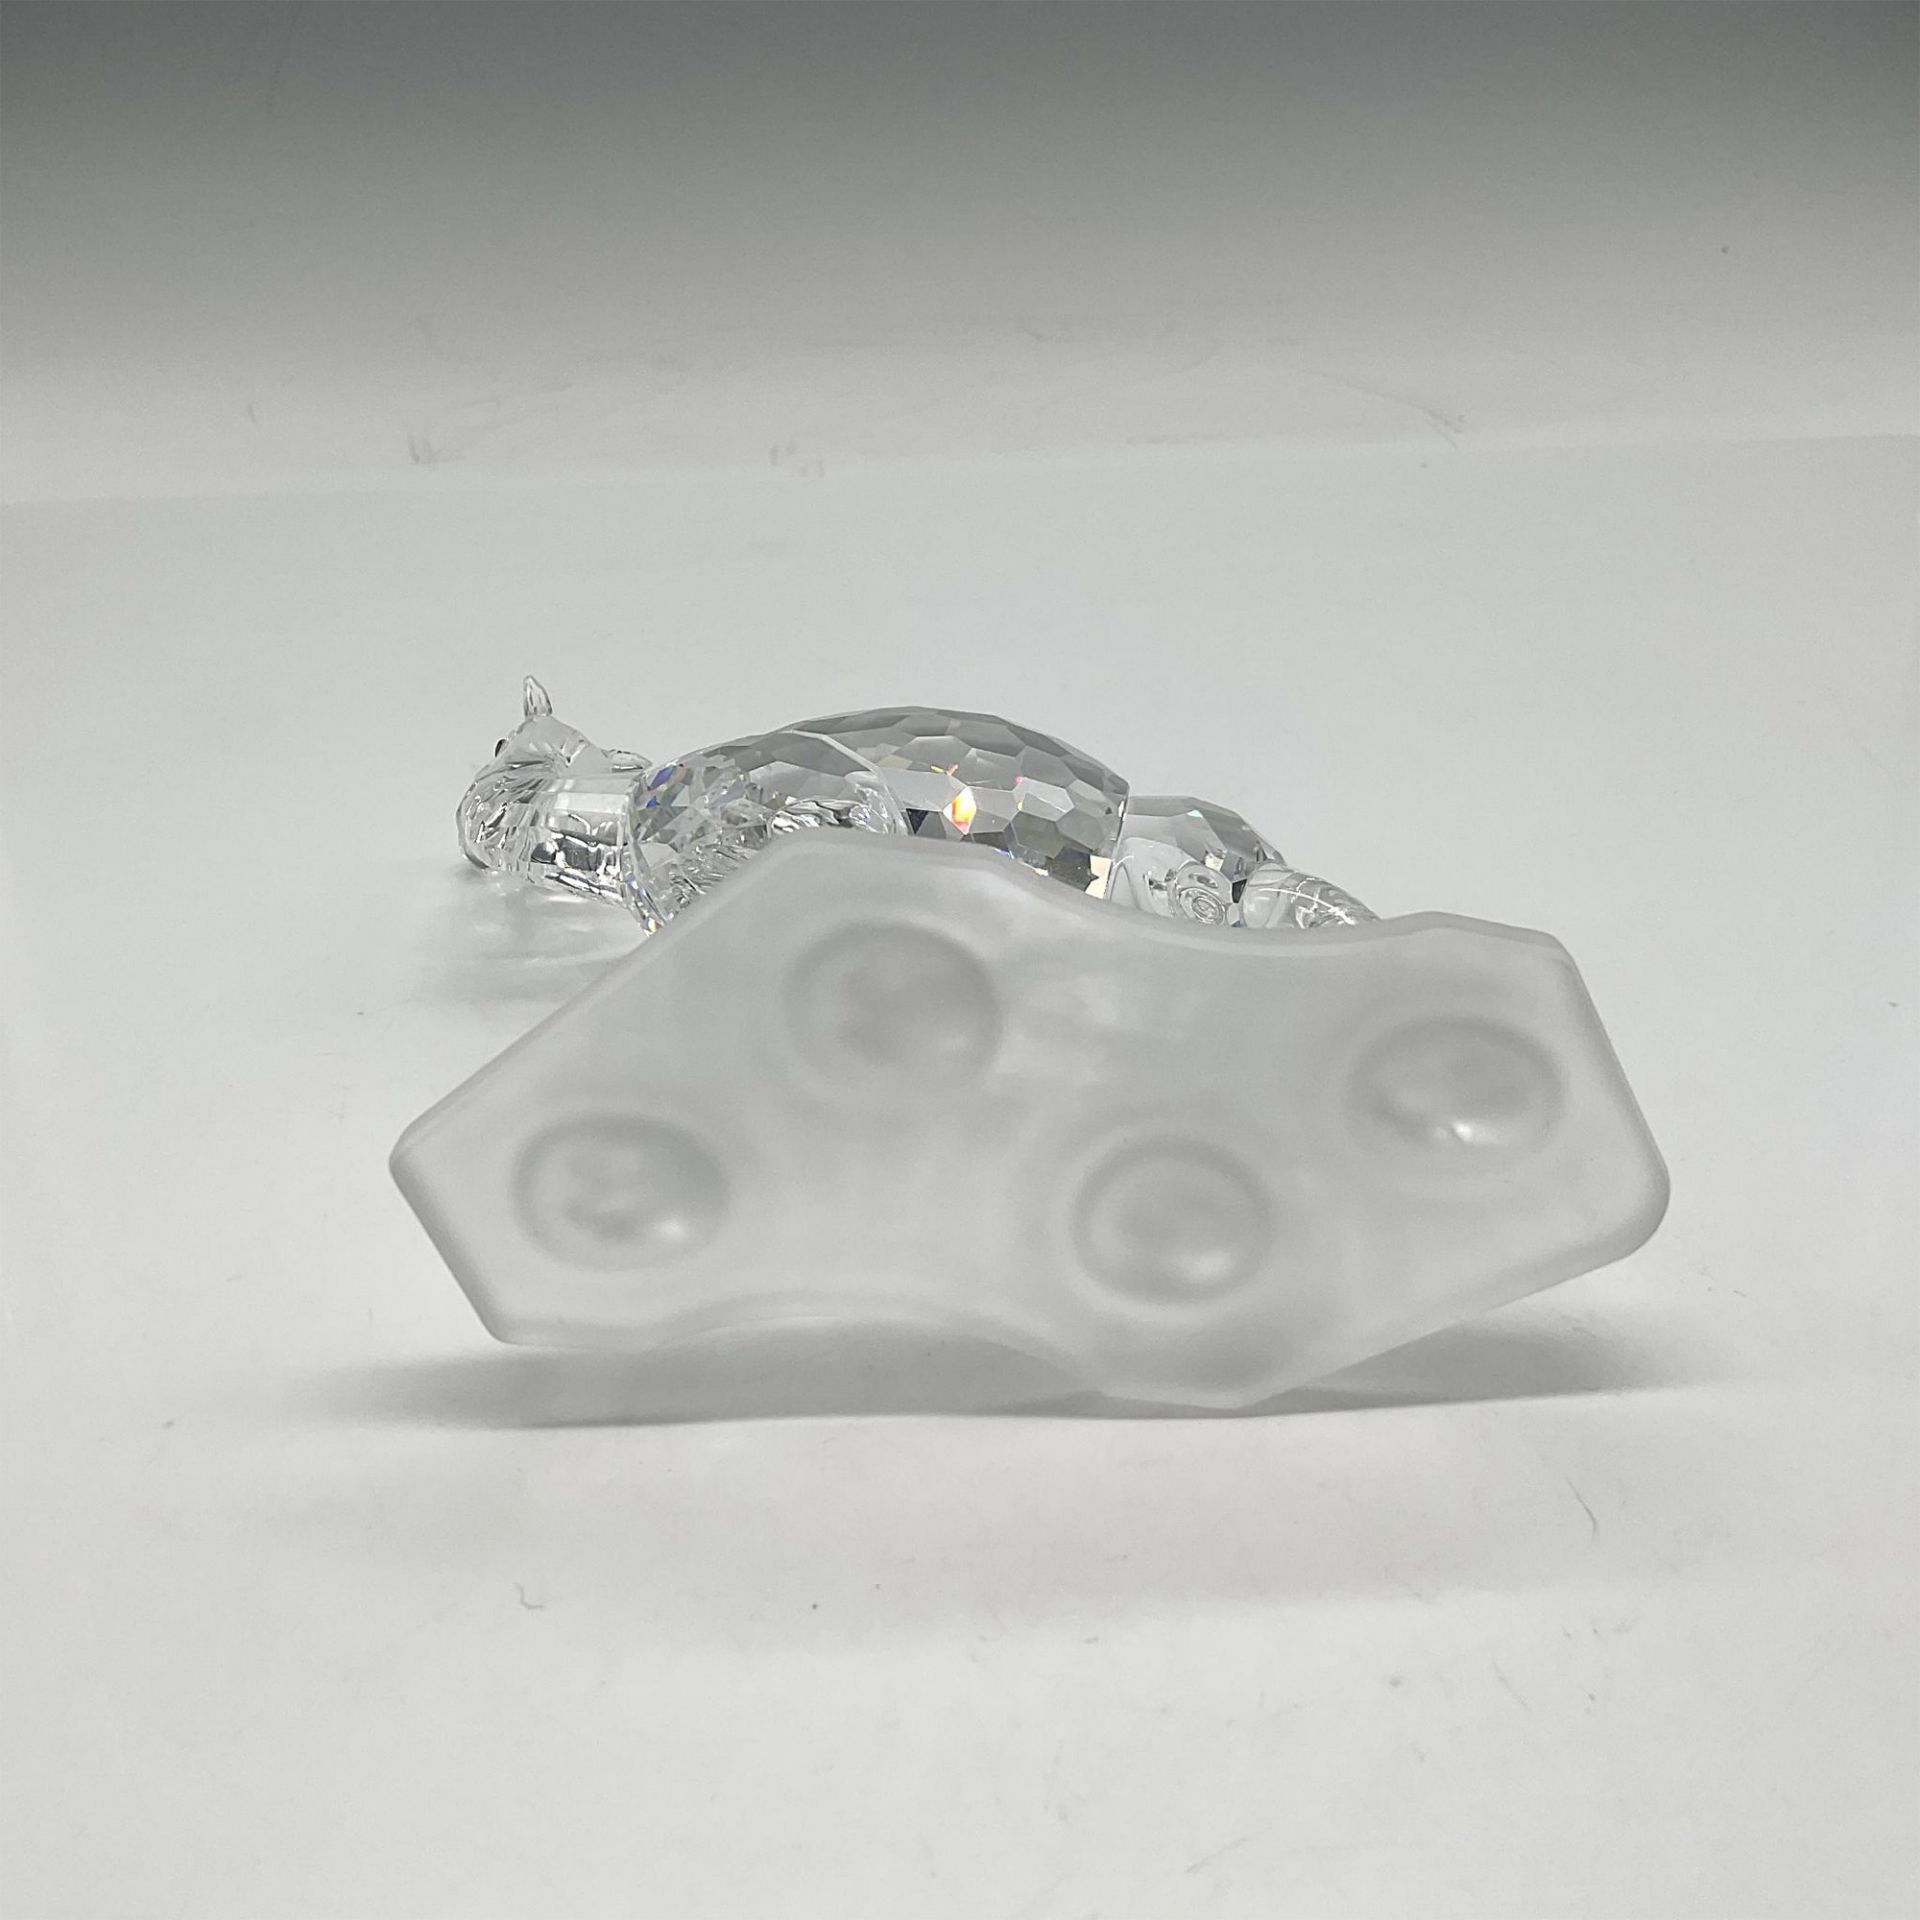 Swarovski Crystal Figurine, Camel - Image 3 of 3